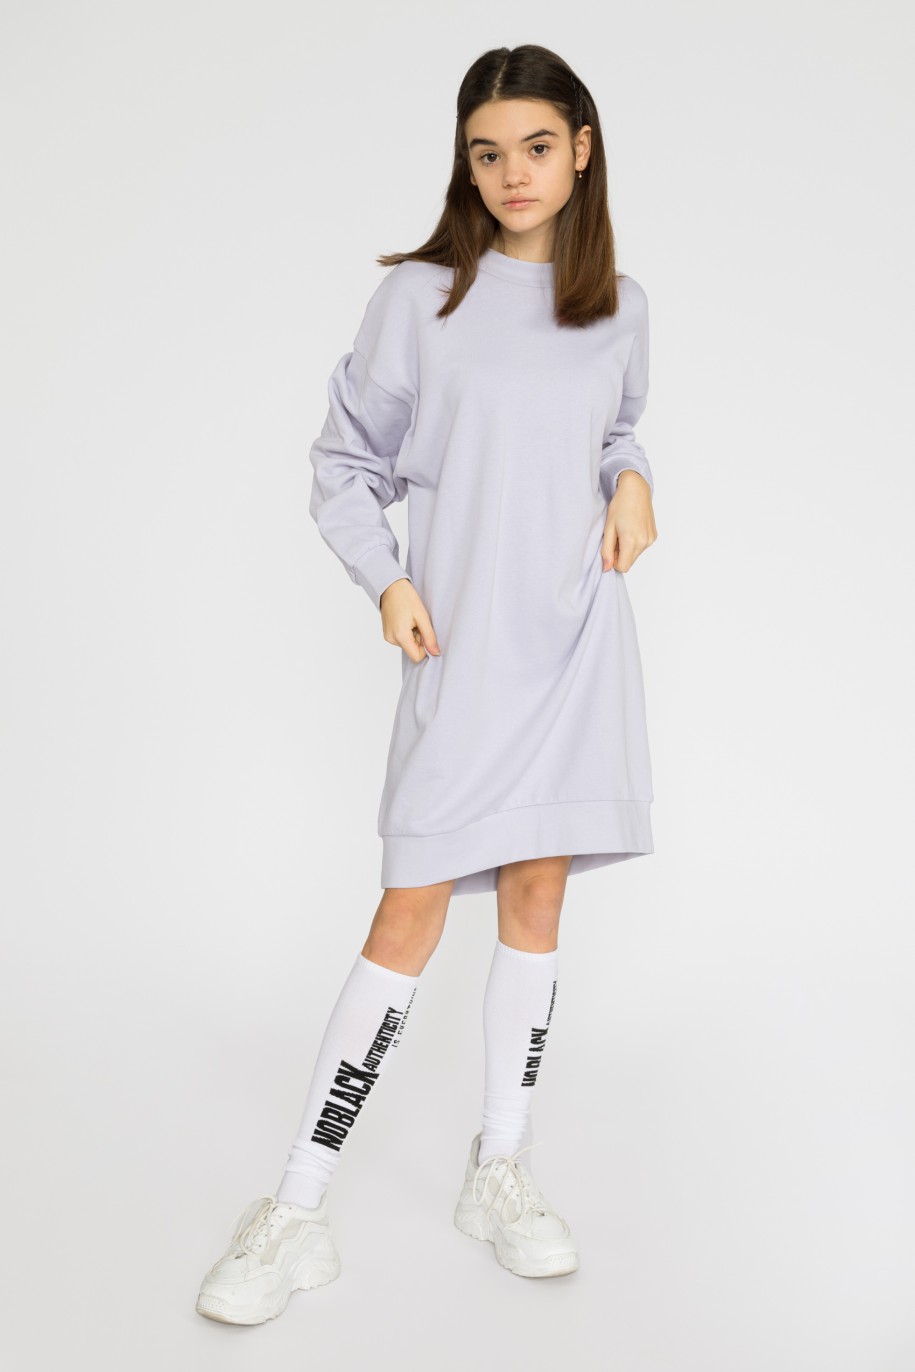 Liliowa bluzowa sukienka  SNOWBOARD - 32317